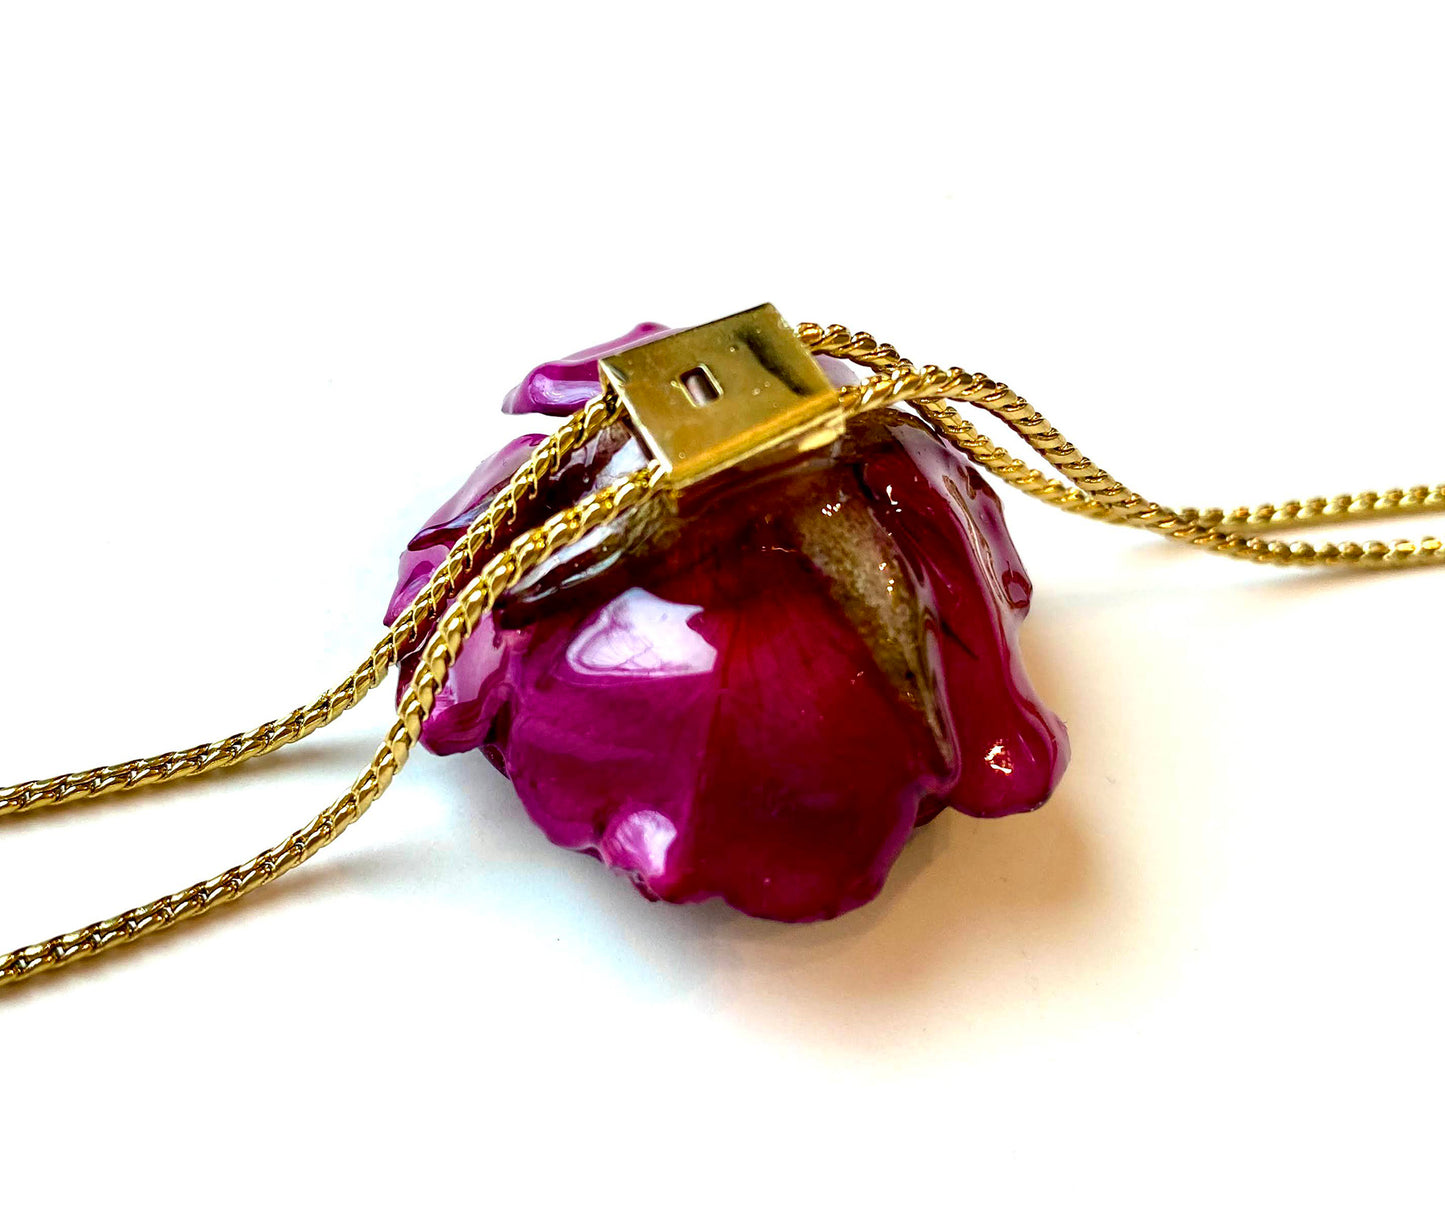 Mini Rose Mini 1.5-2.25 inch Pendant Necklace 18 inch Gold Plated 24K (Purple)